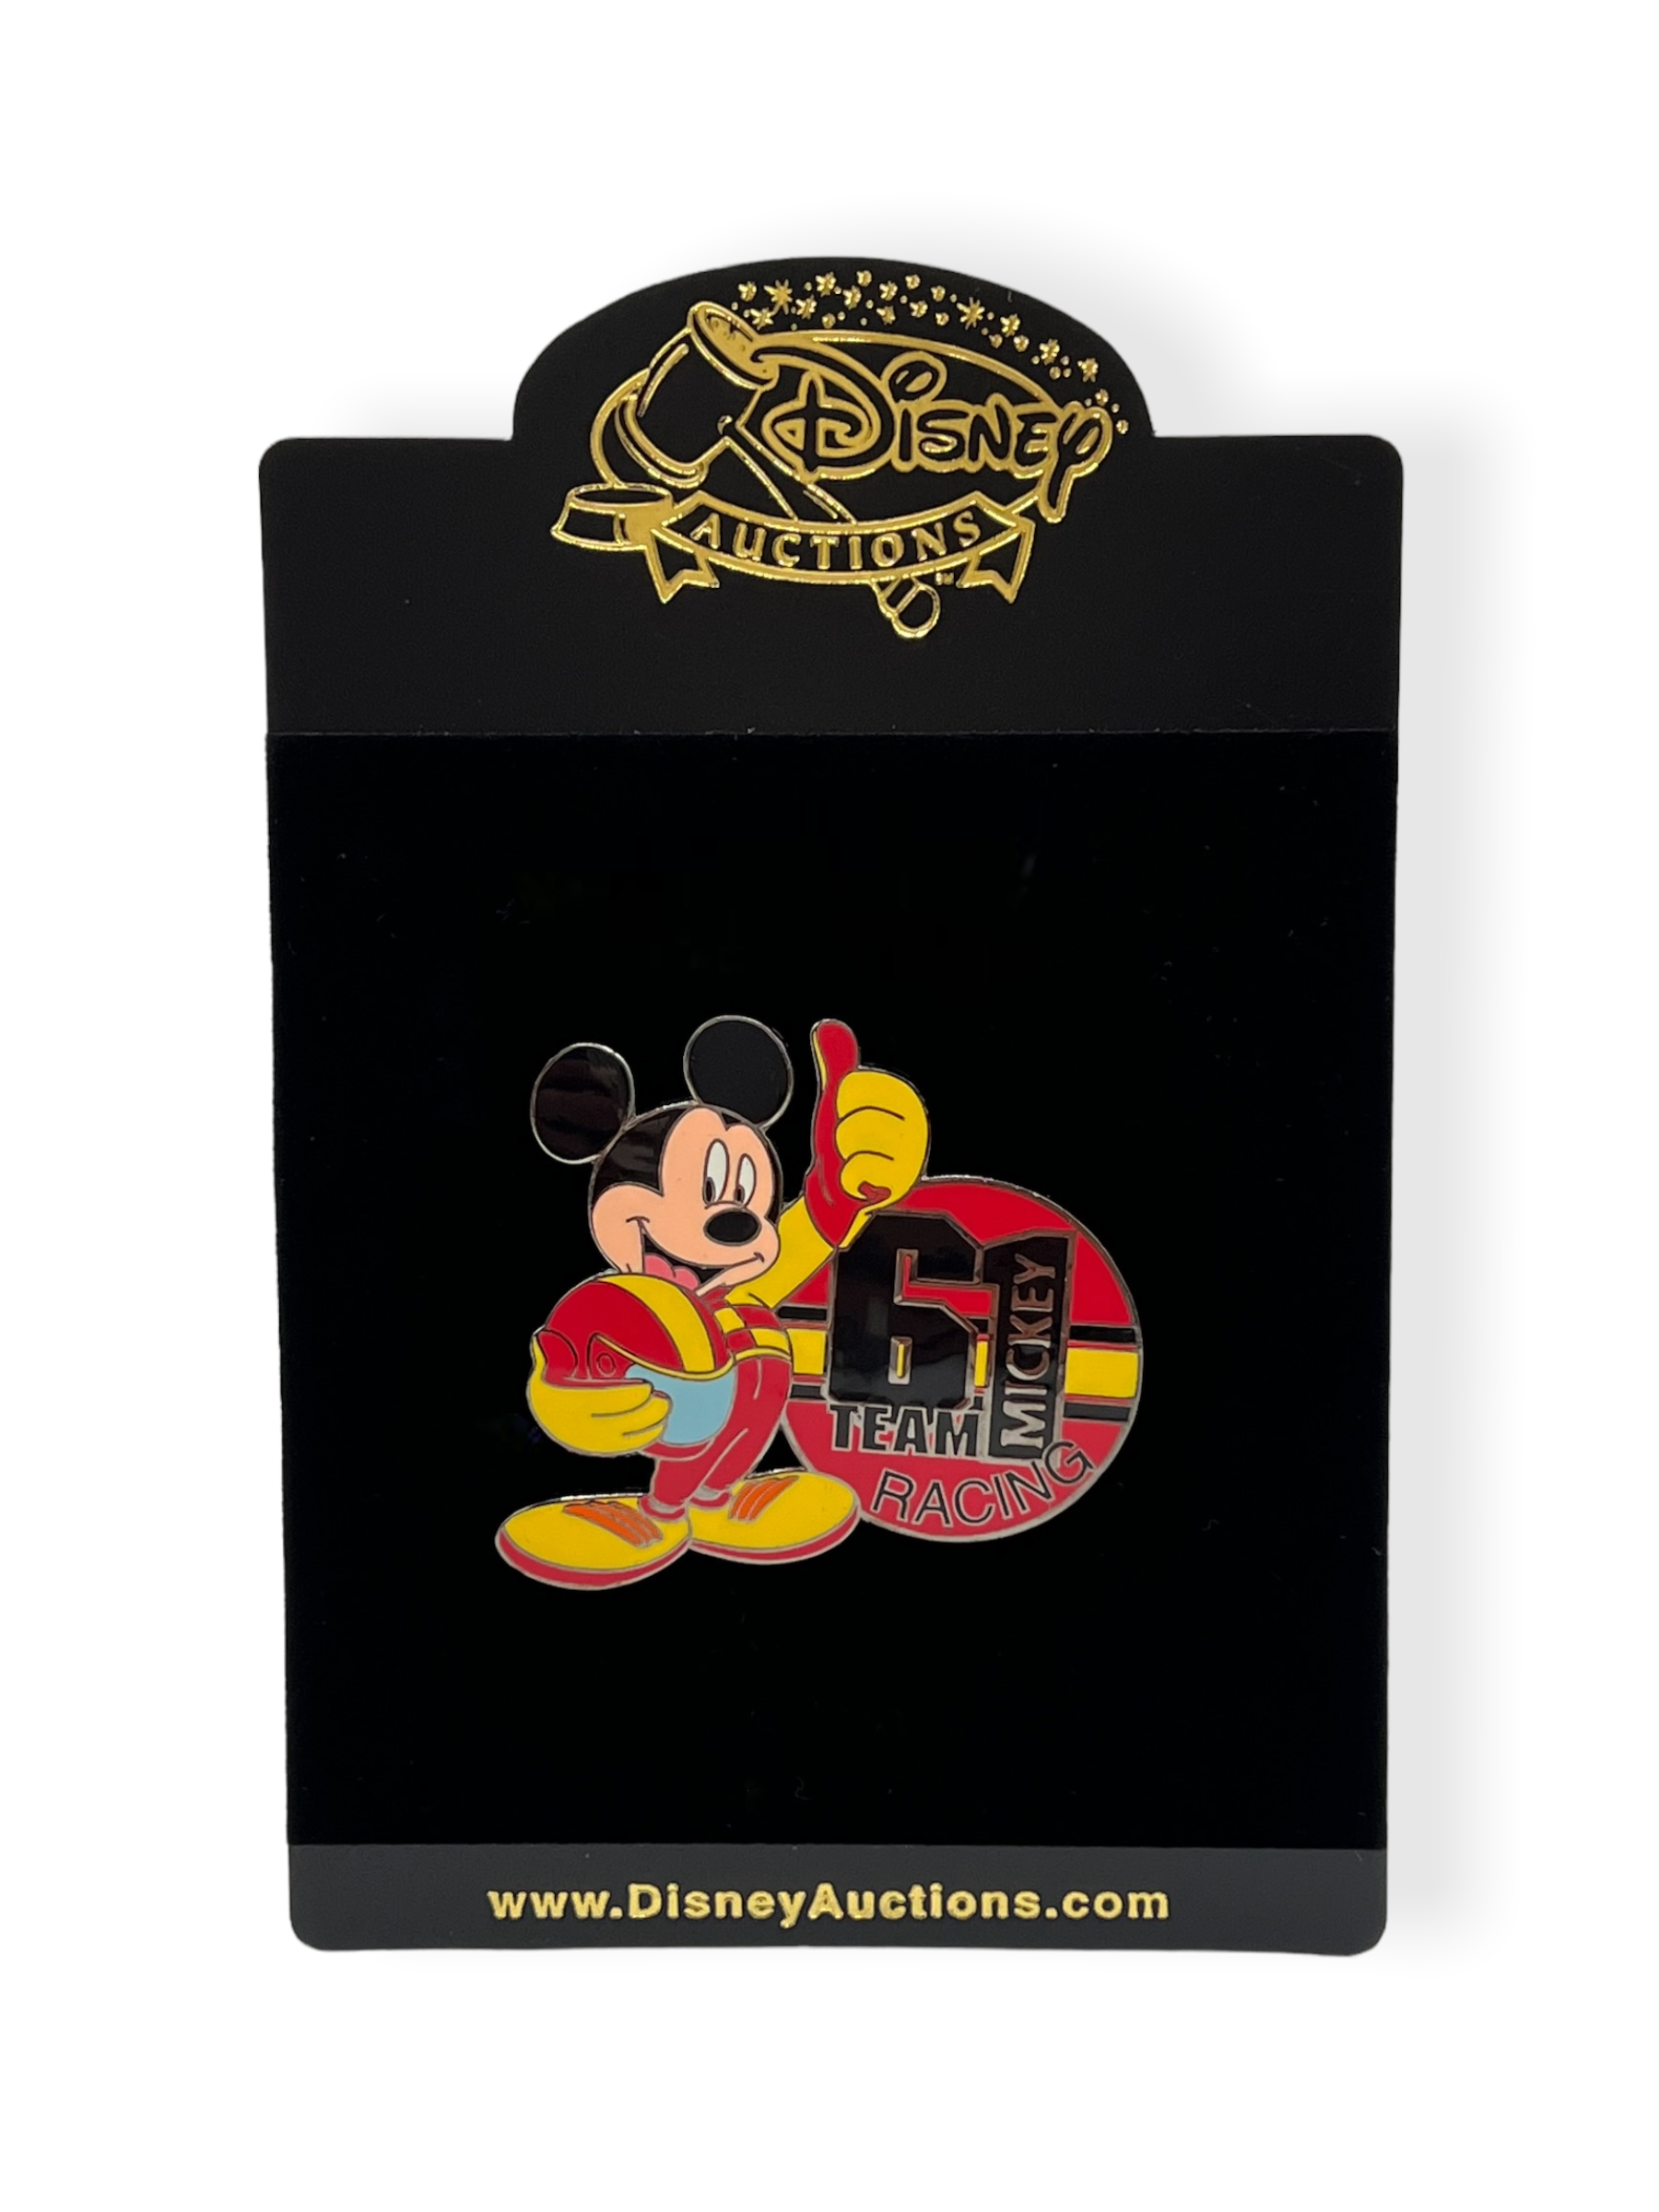 Disney Auctions Team Mickey Racing Pin